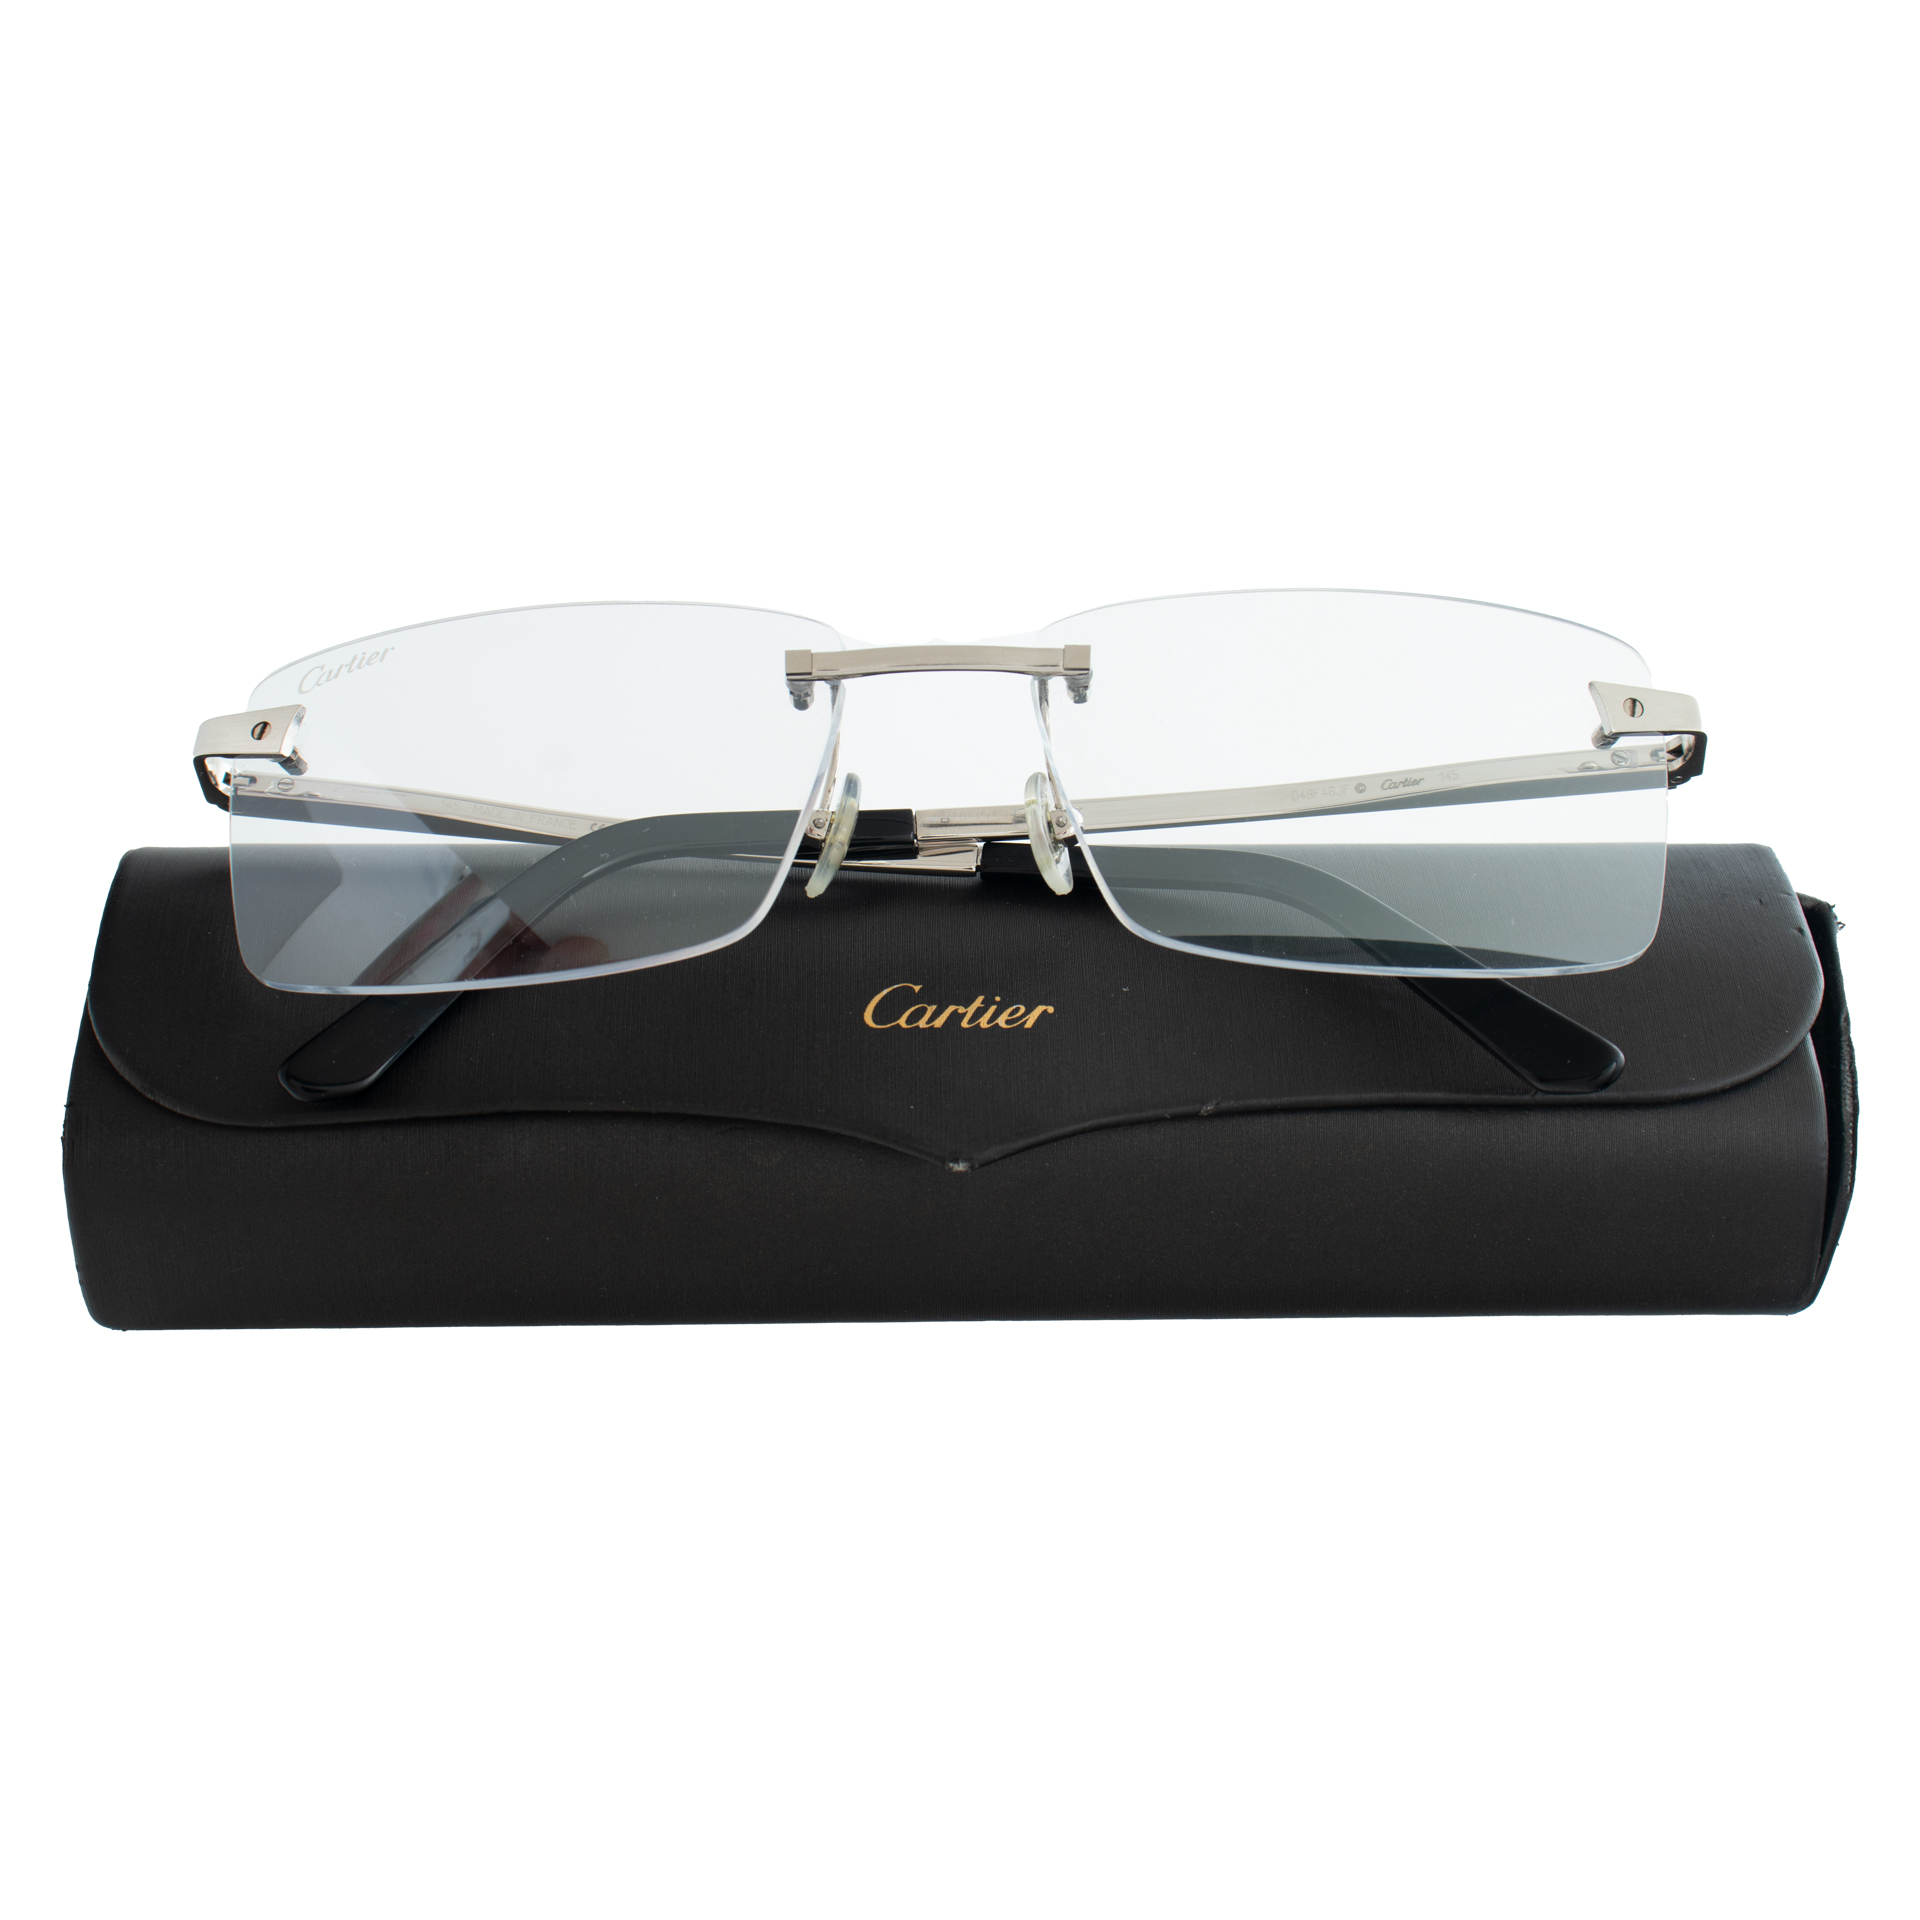 Cartier Rimless Silver Frame Glasses image 6